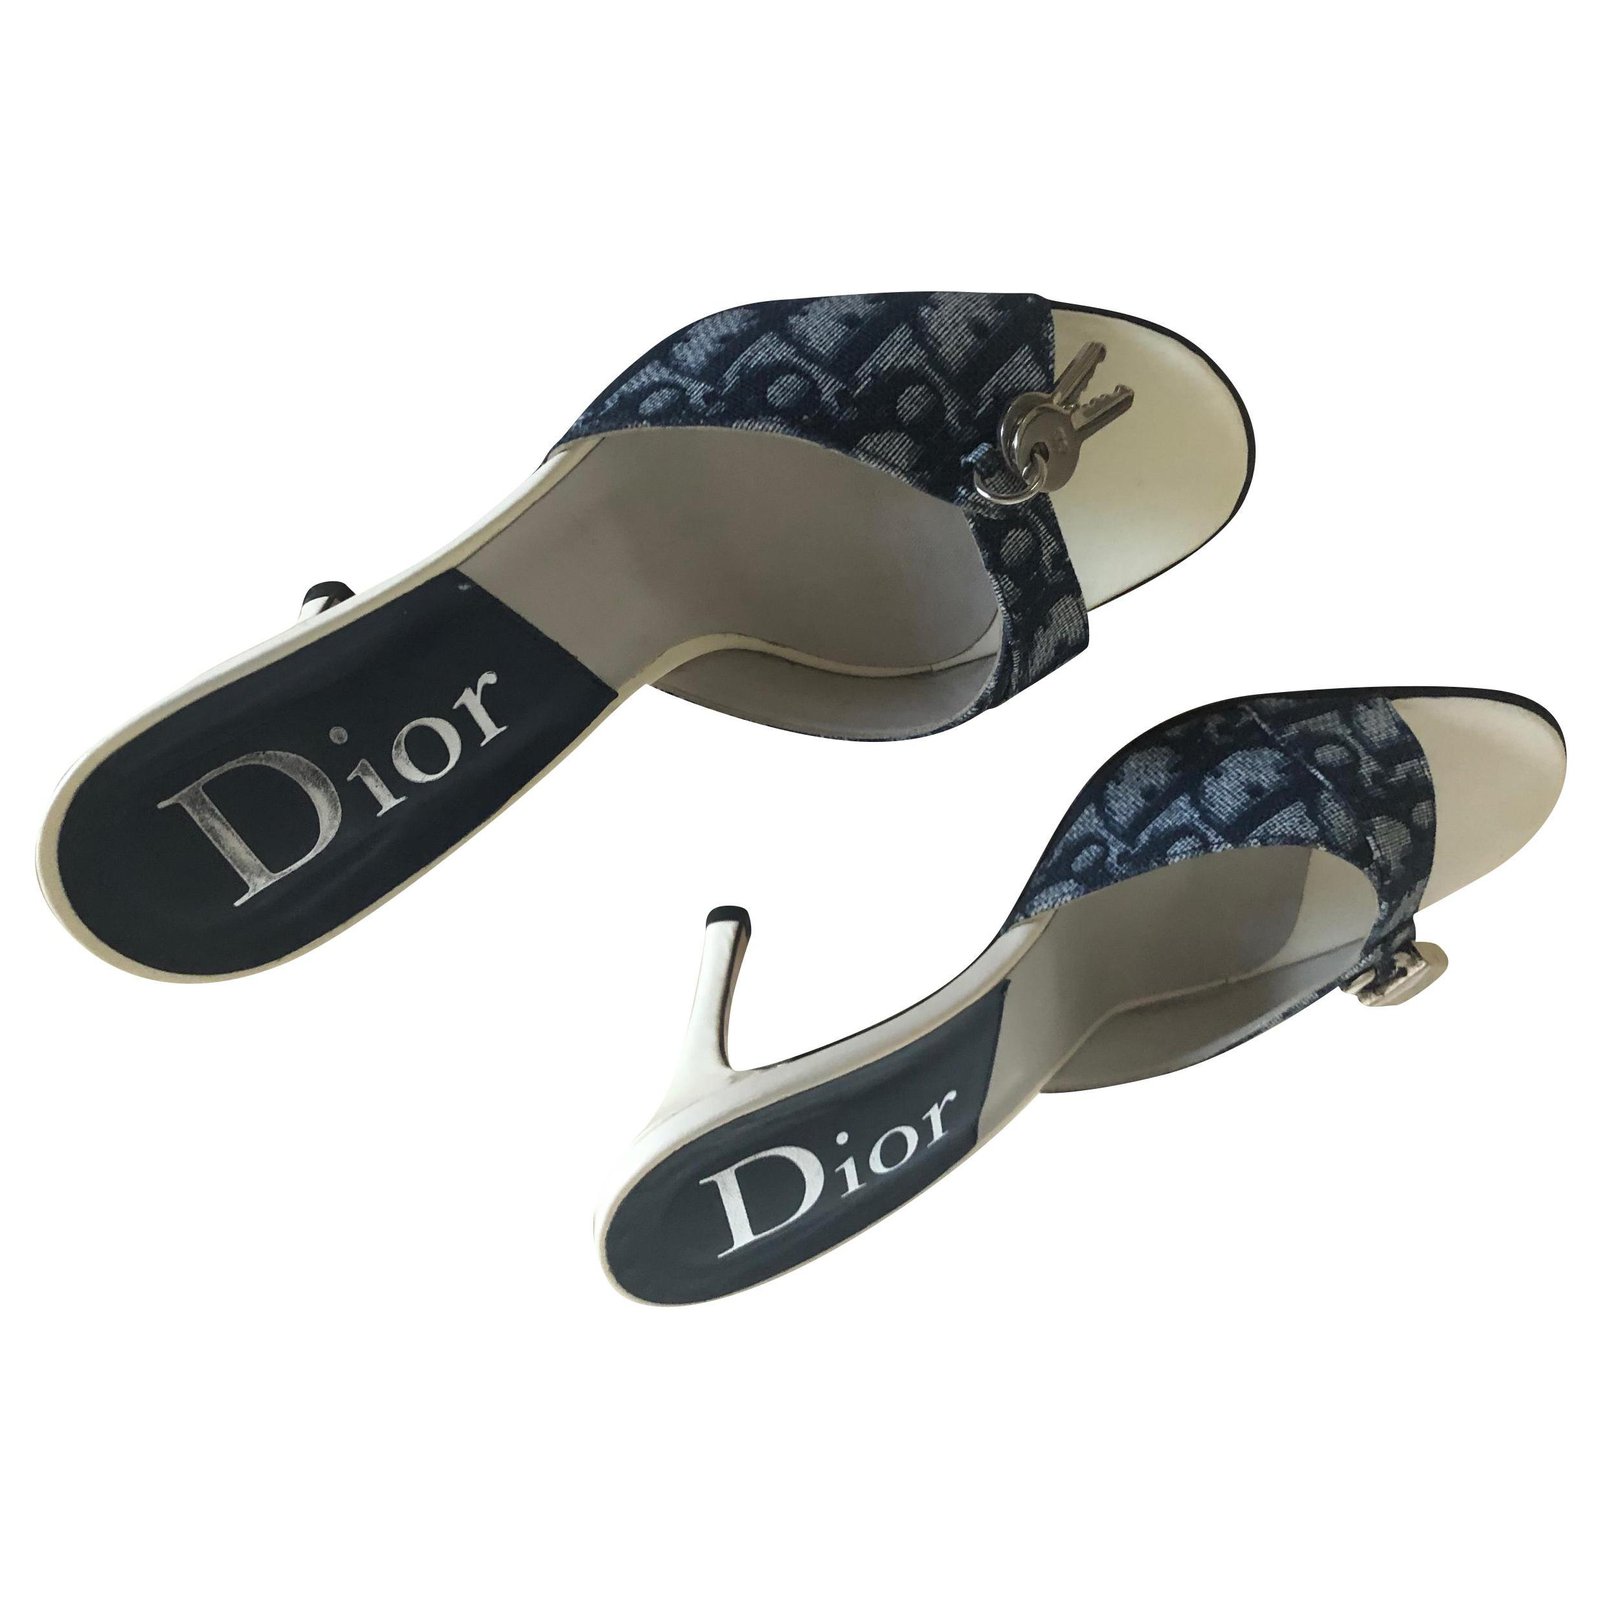 Dior  Shoes  Ultra Rare Vintage Christian Dior Cd Sandals Nwt  Poshmark